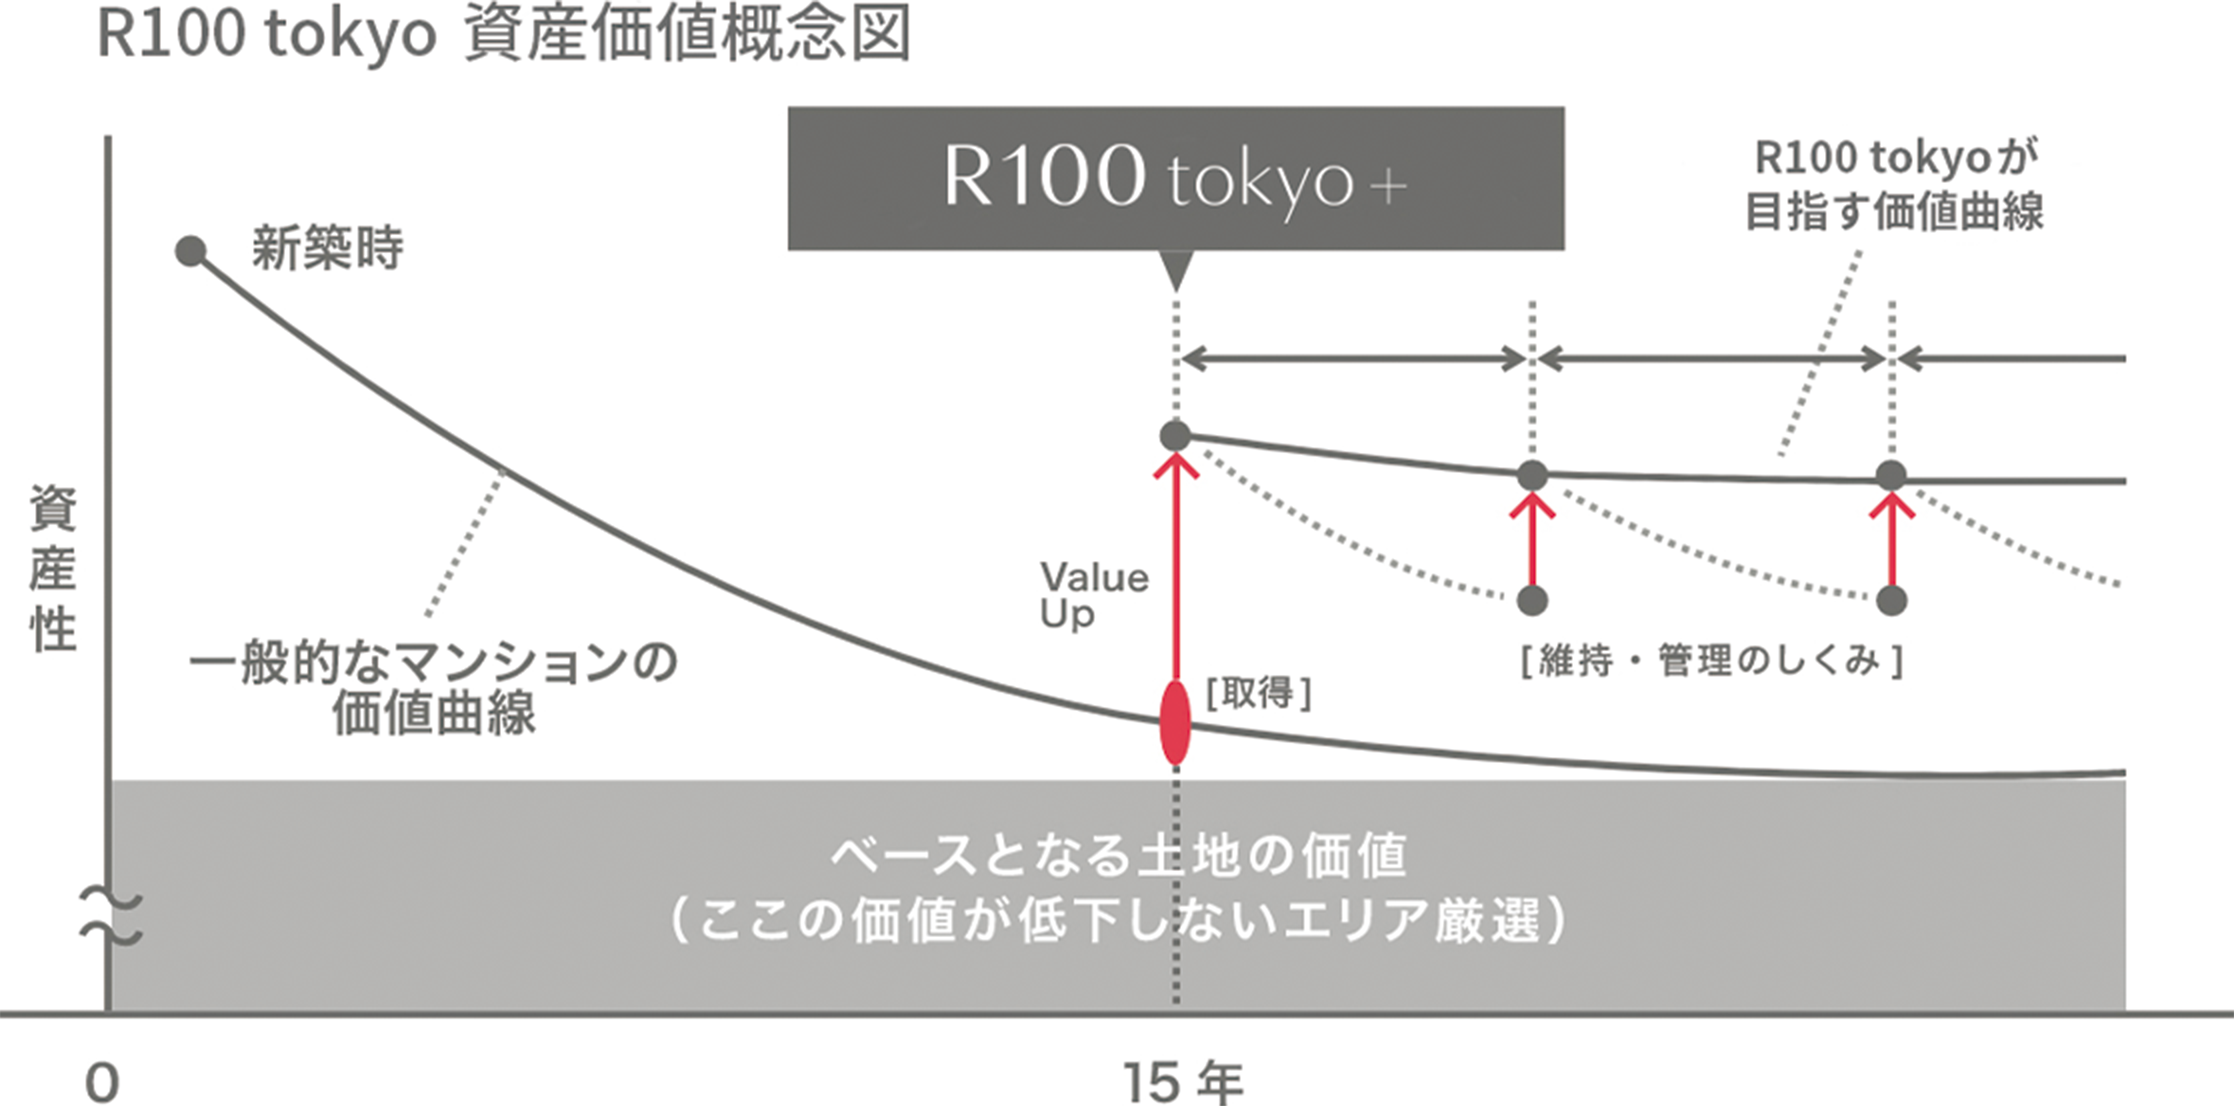 R100 tokyo 資産価値概念図